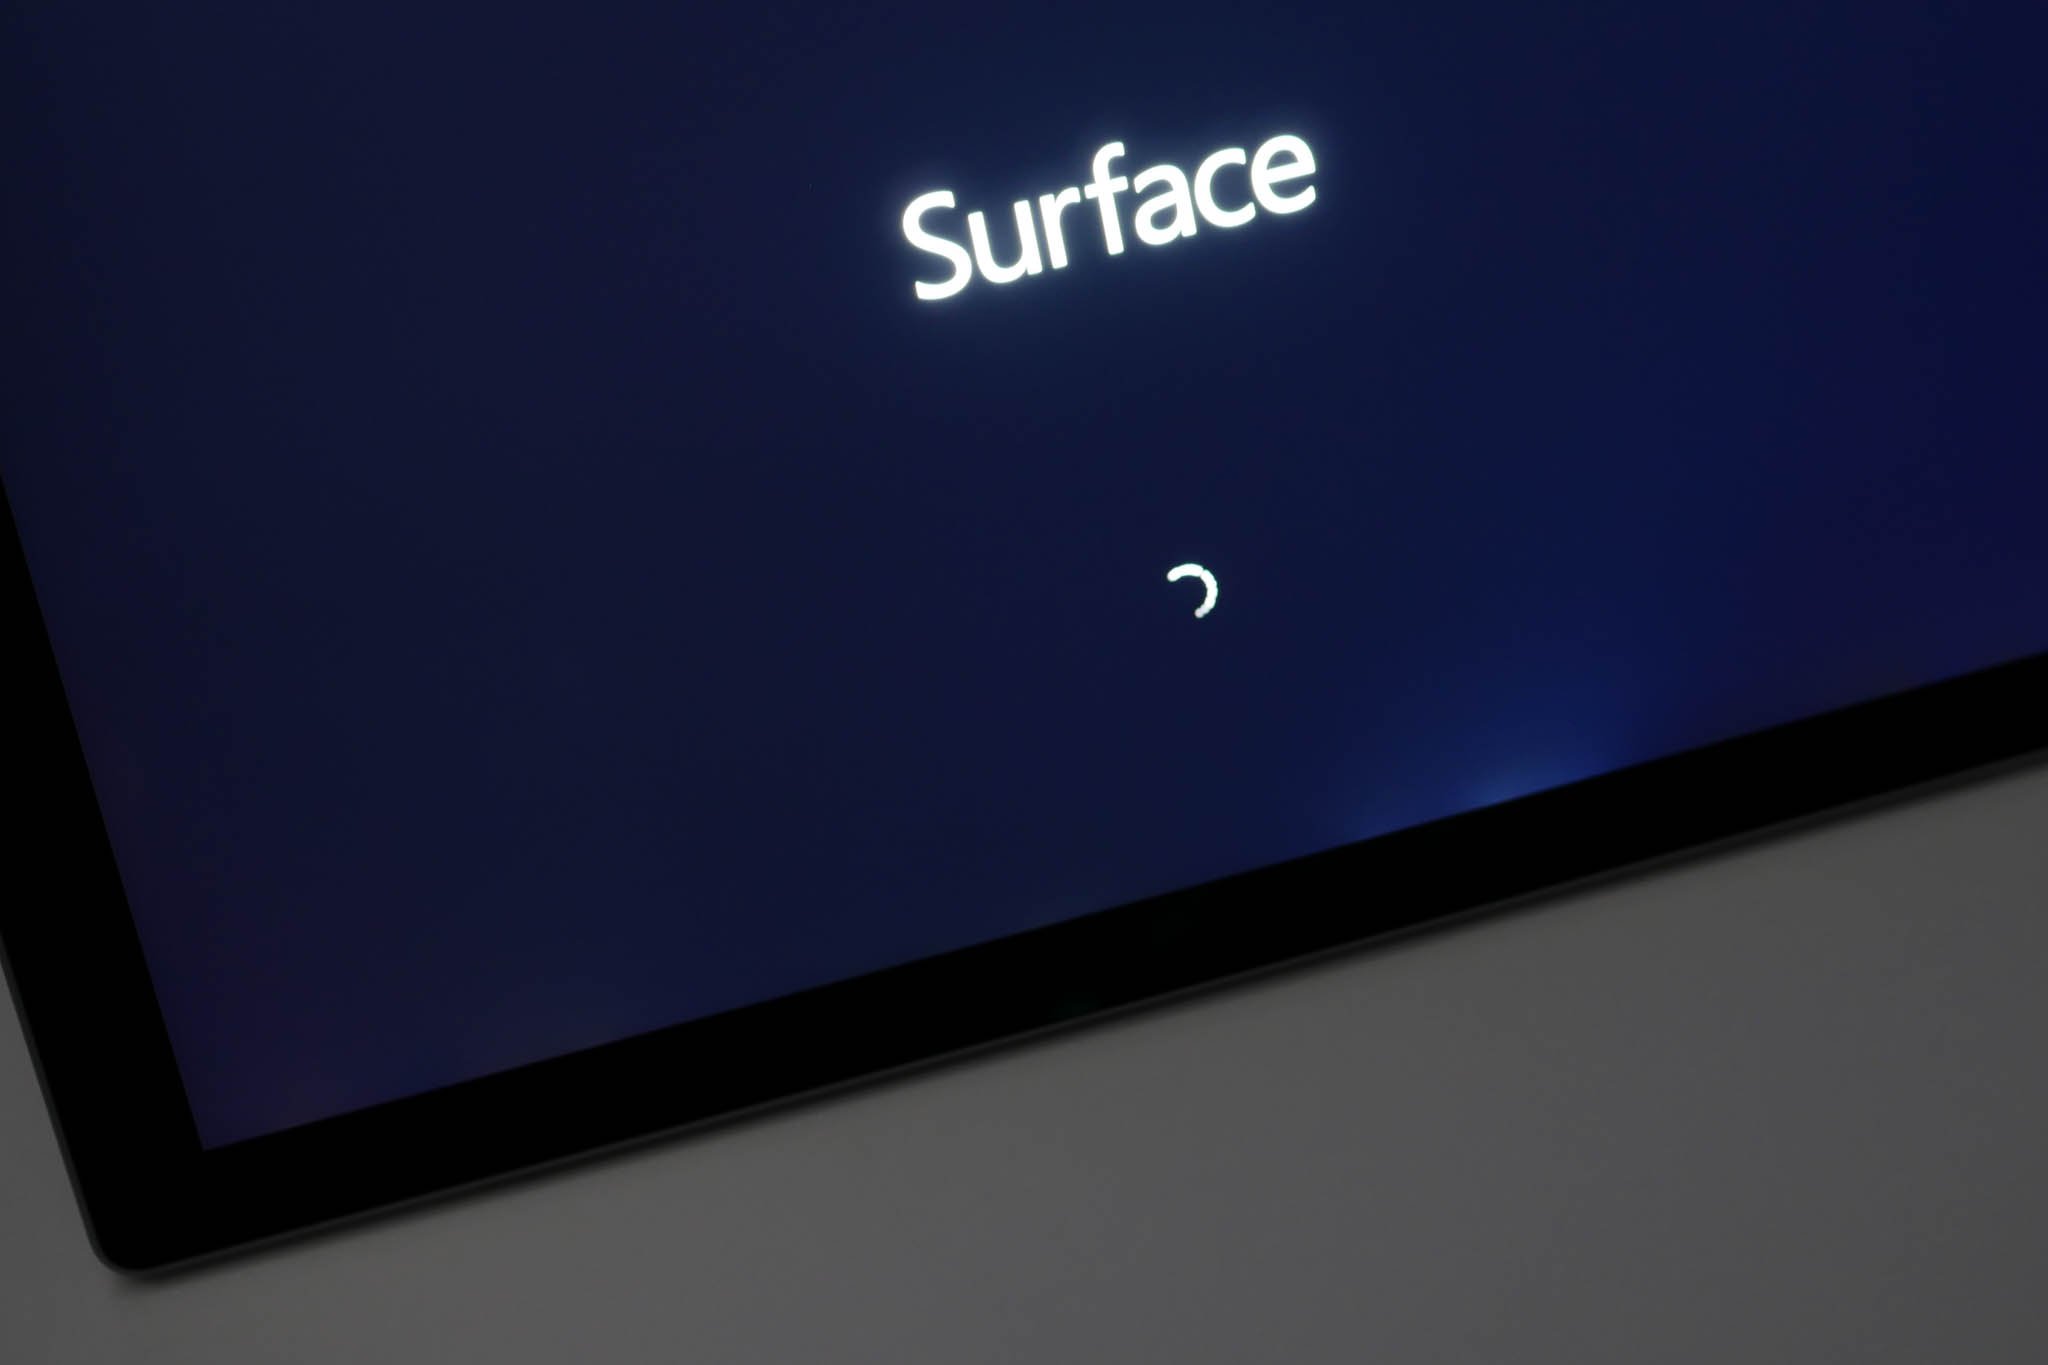 Microsoft Surface Pro 4 Light Bleed